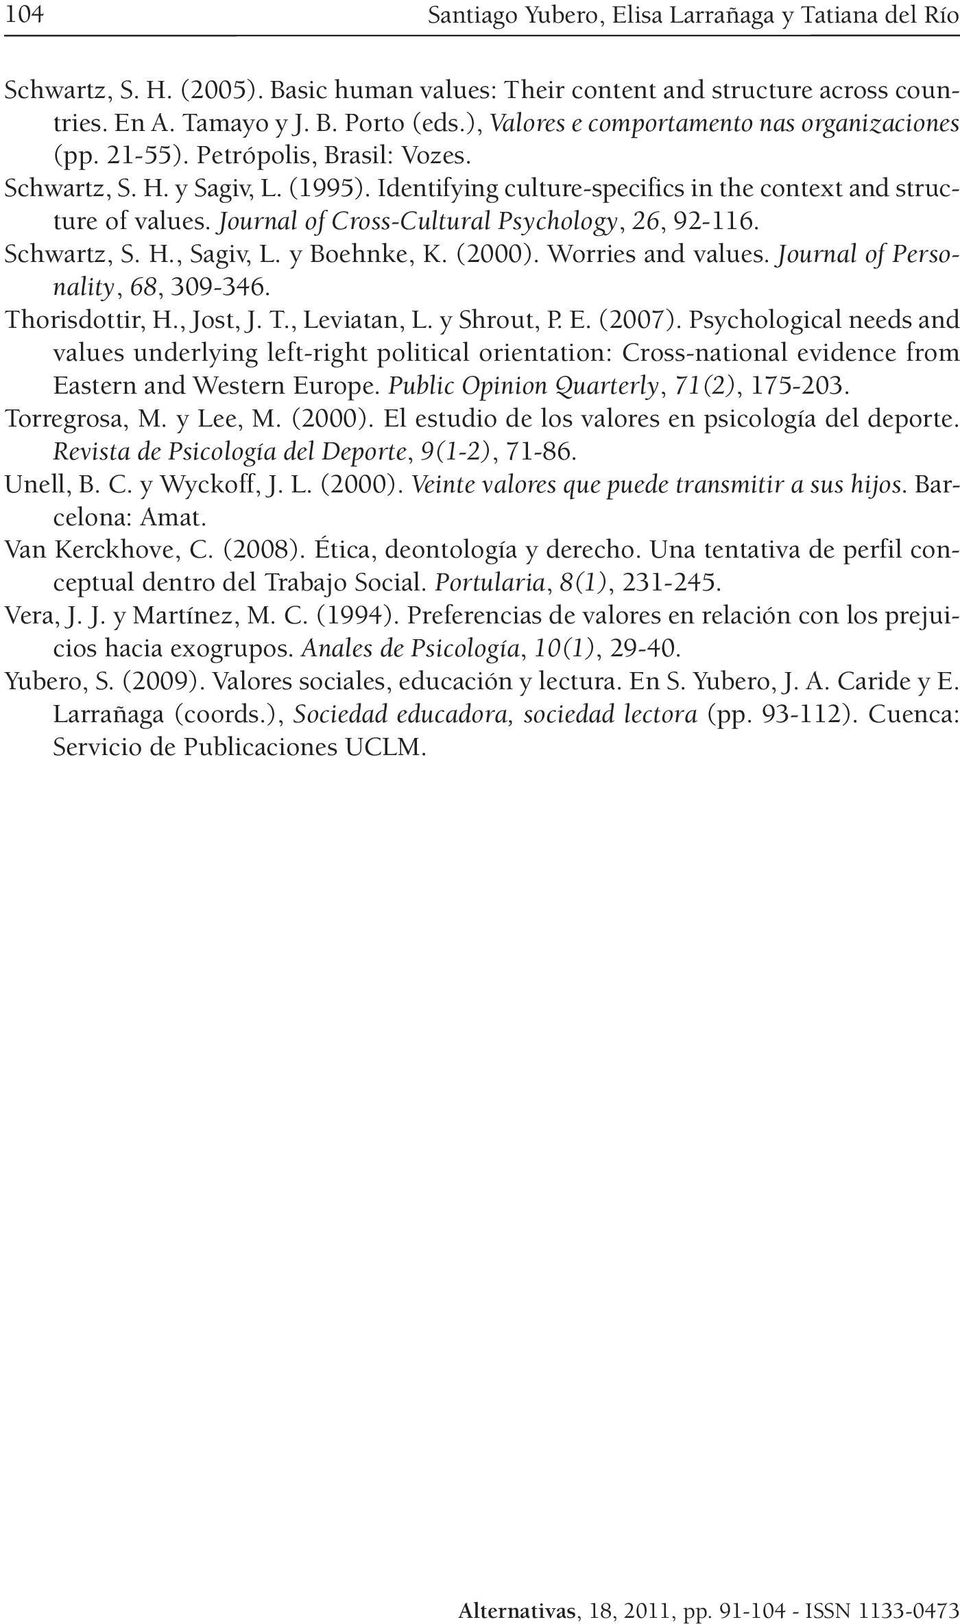 Journal of Cross-Cultural Psychology, 26, 92-116. Schwartz, S. H., Sagiv, L. y Boehnke, K. (2000). Worries and values. Journal of Personality, 68, 309-346. Thorisdottir, H., Jost, J. T., Leviatan, L.